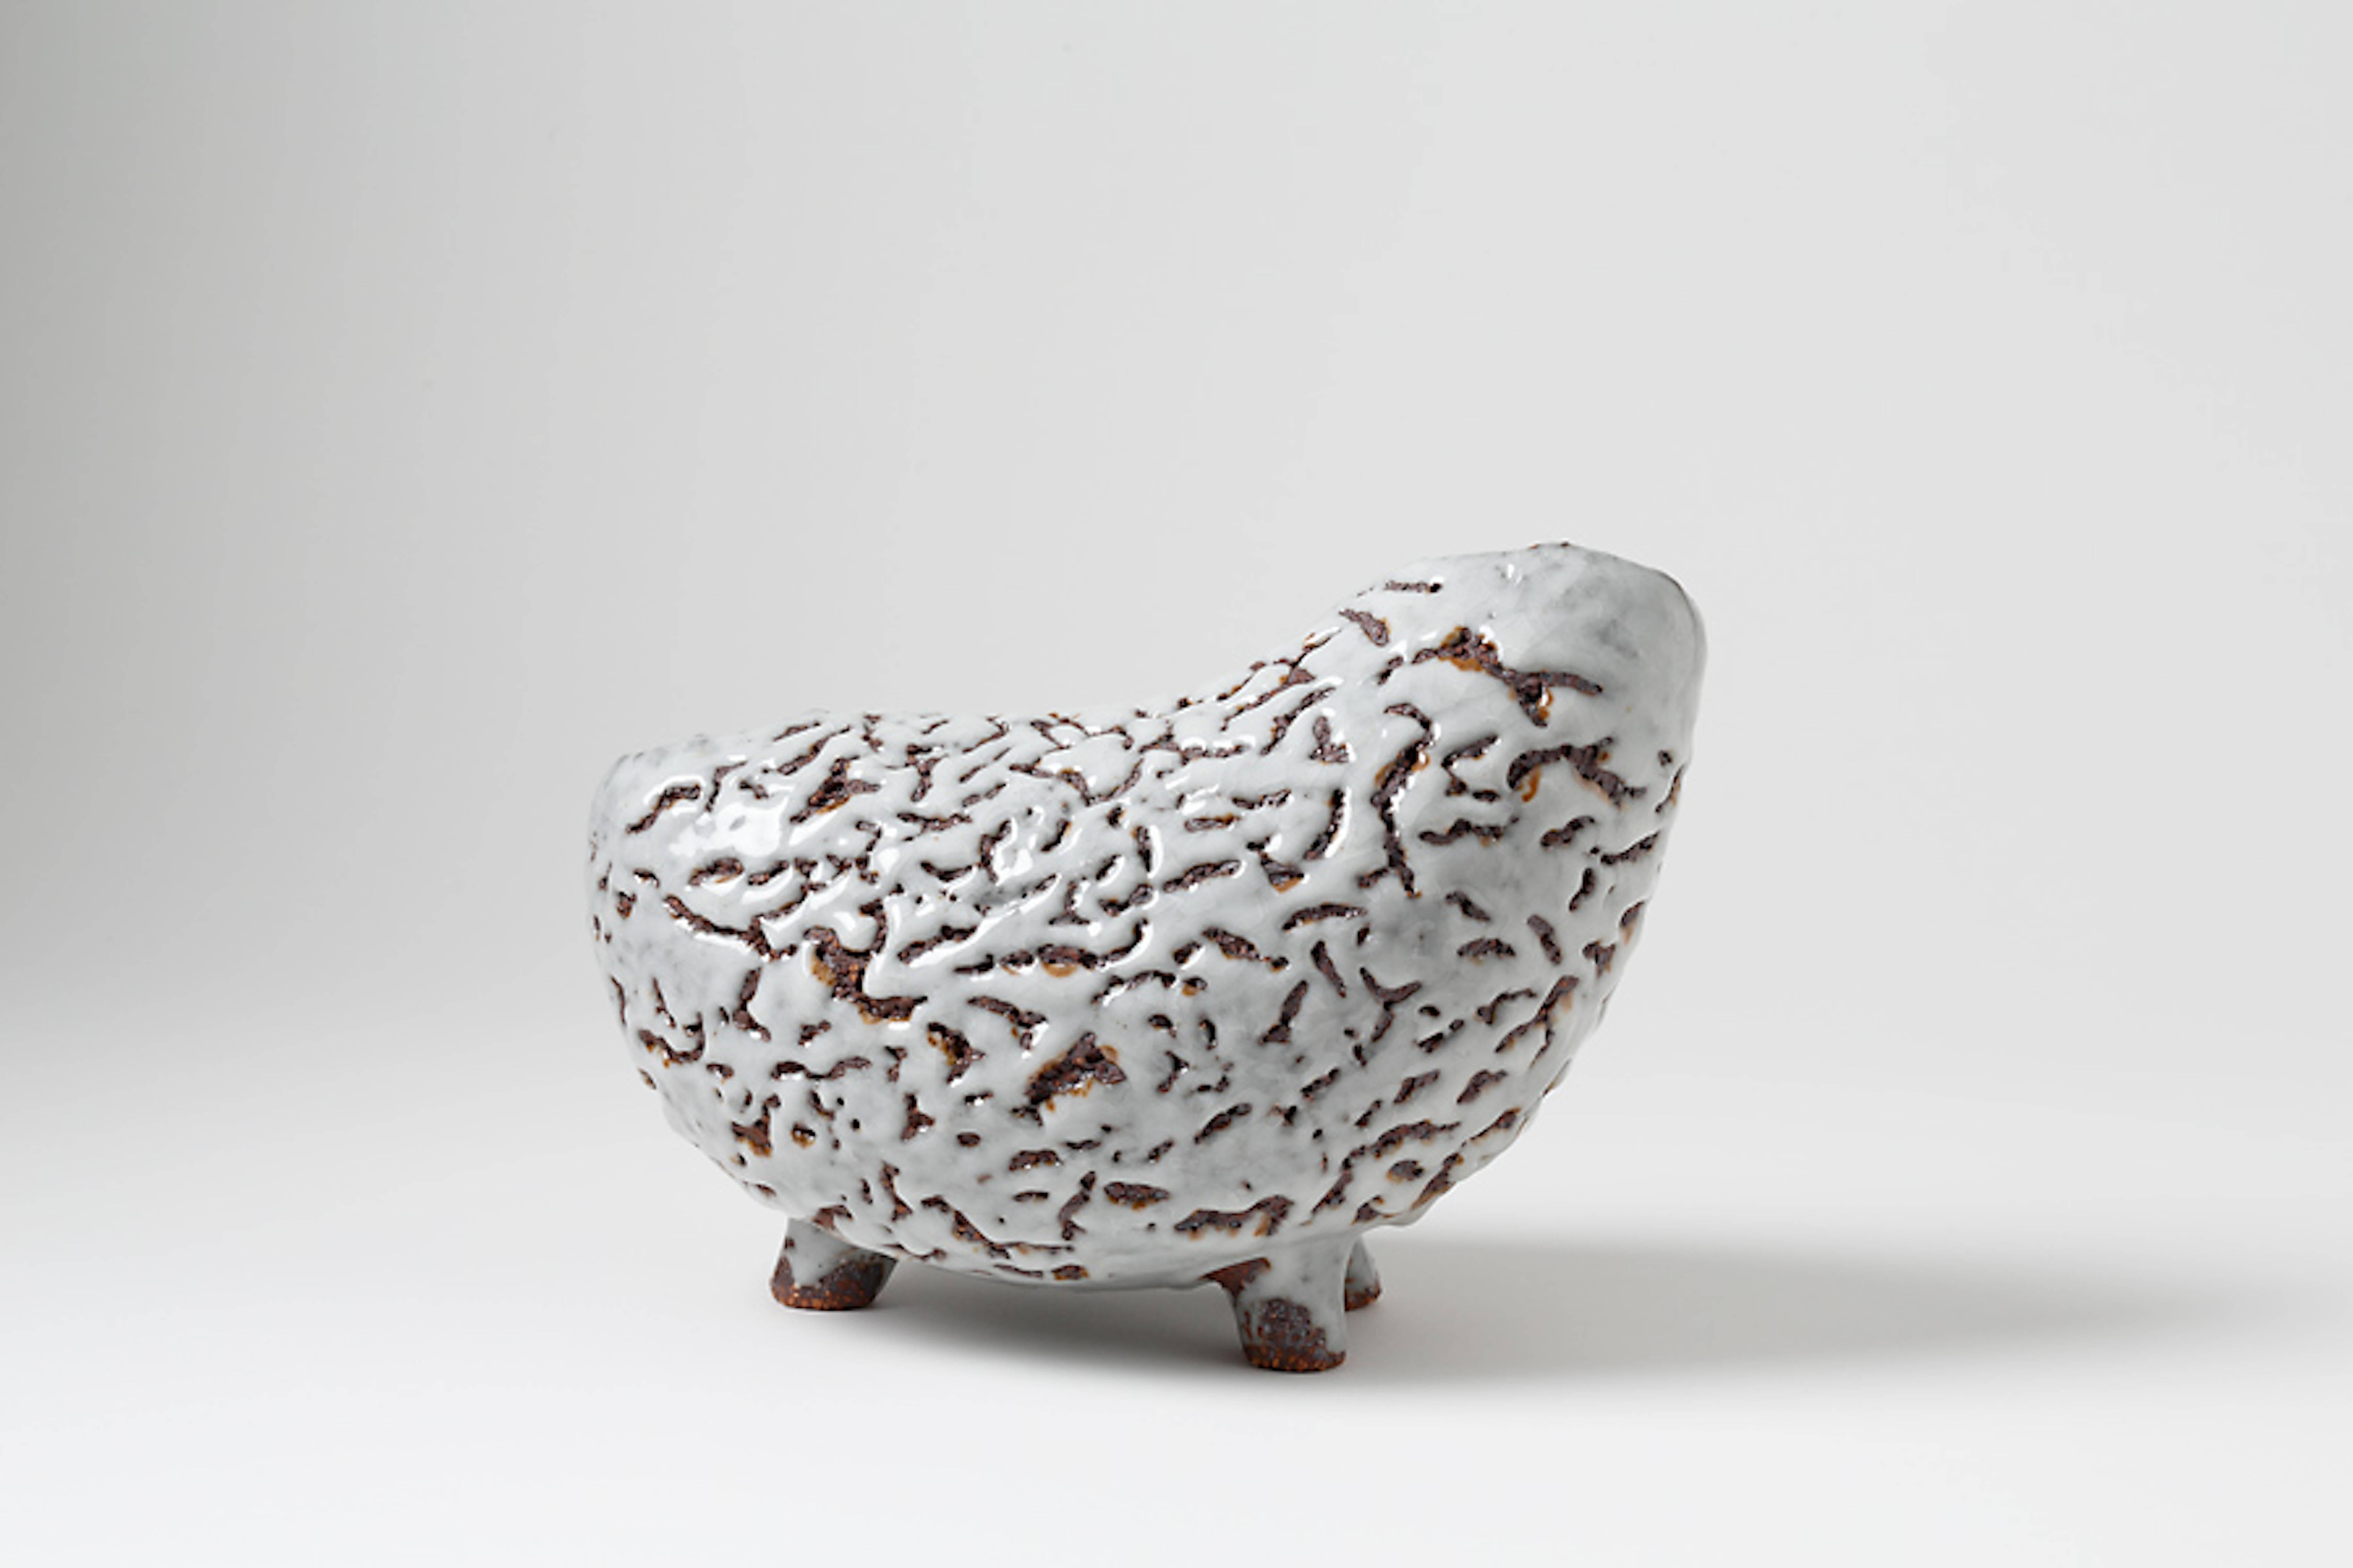 French Contemporary Ceramic by Rozenn Bigot